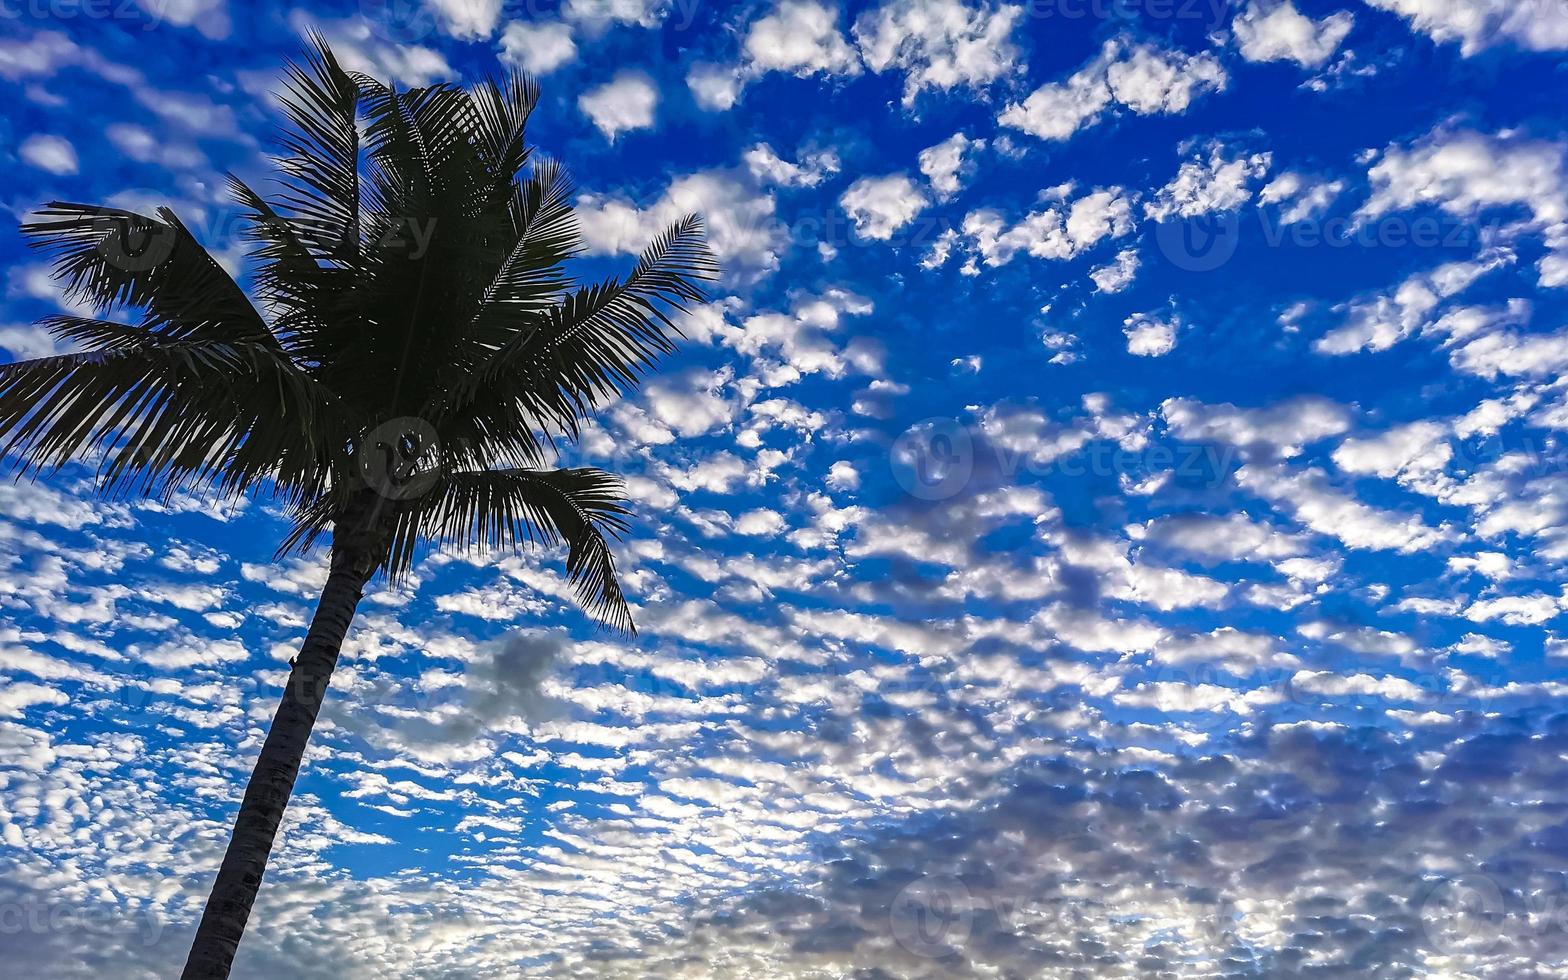 nuvens macias do céu azul e palmeiras sombreadas no méxico. foto